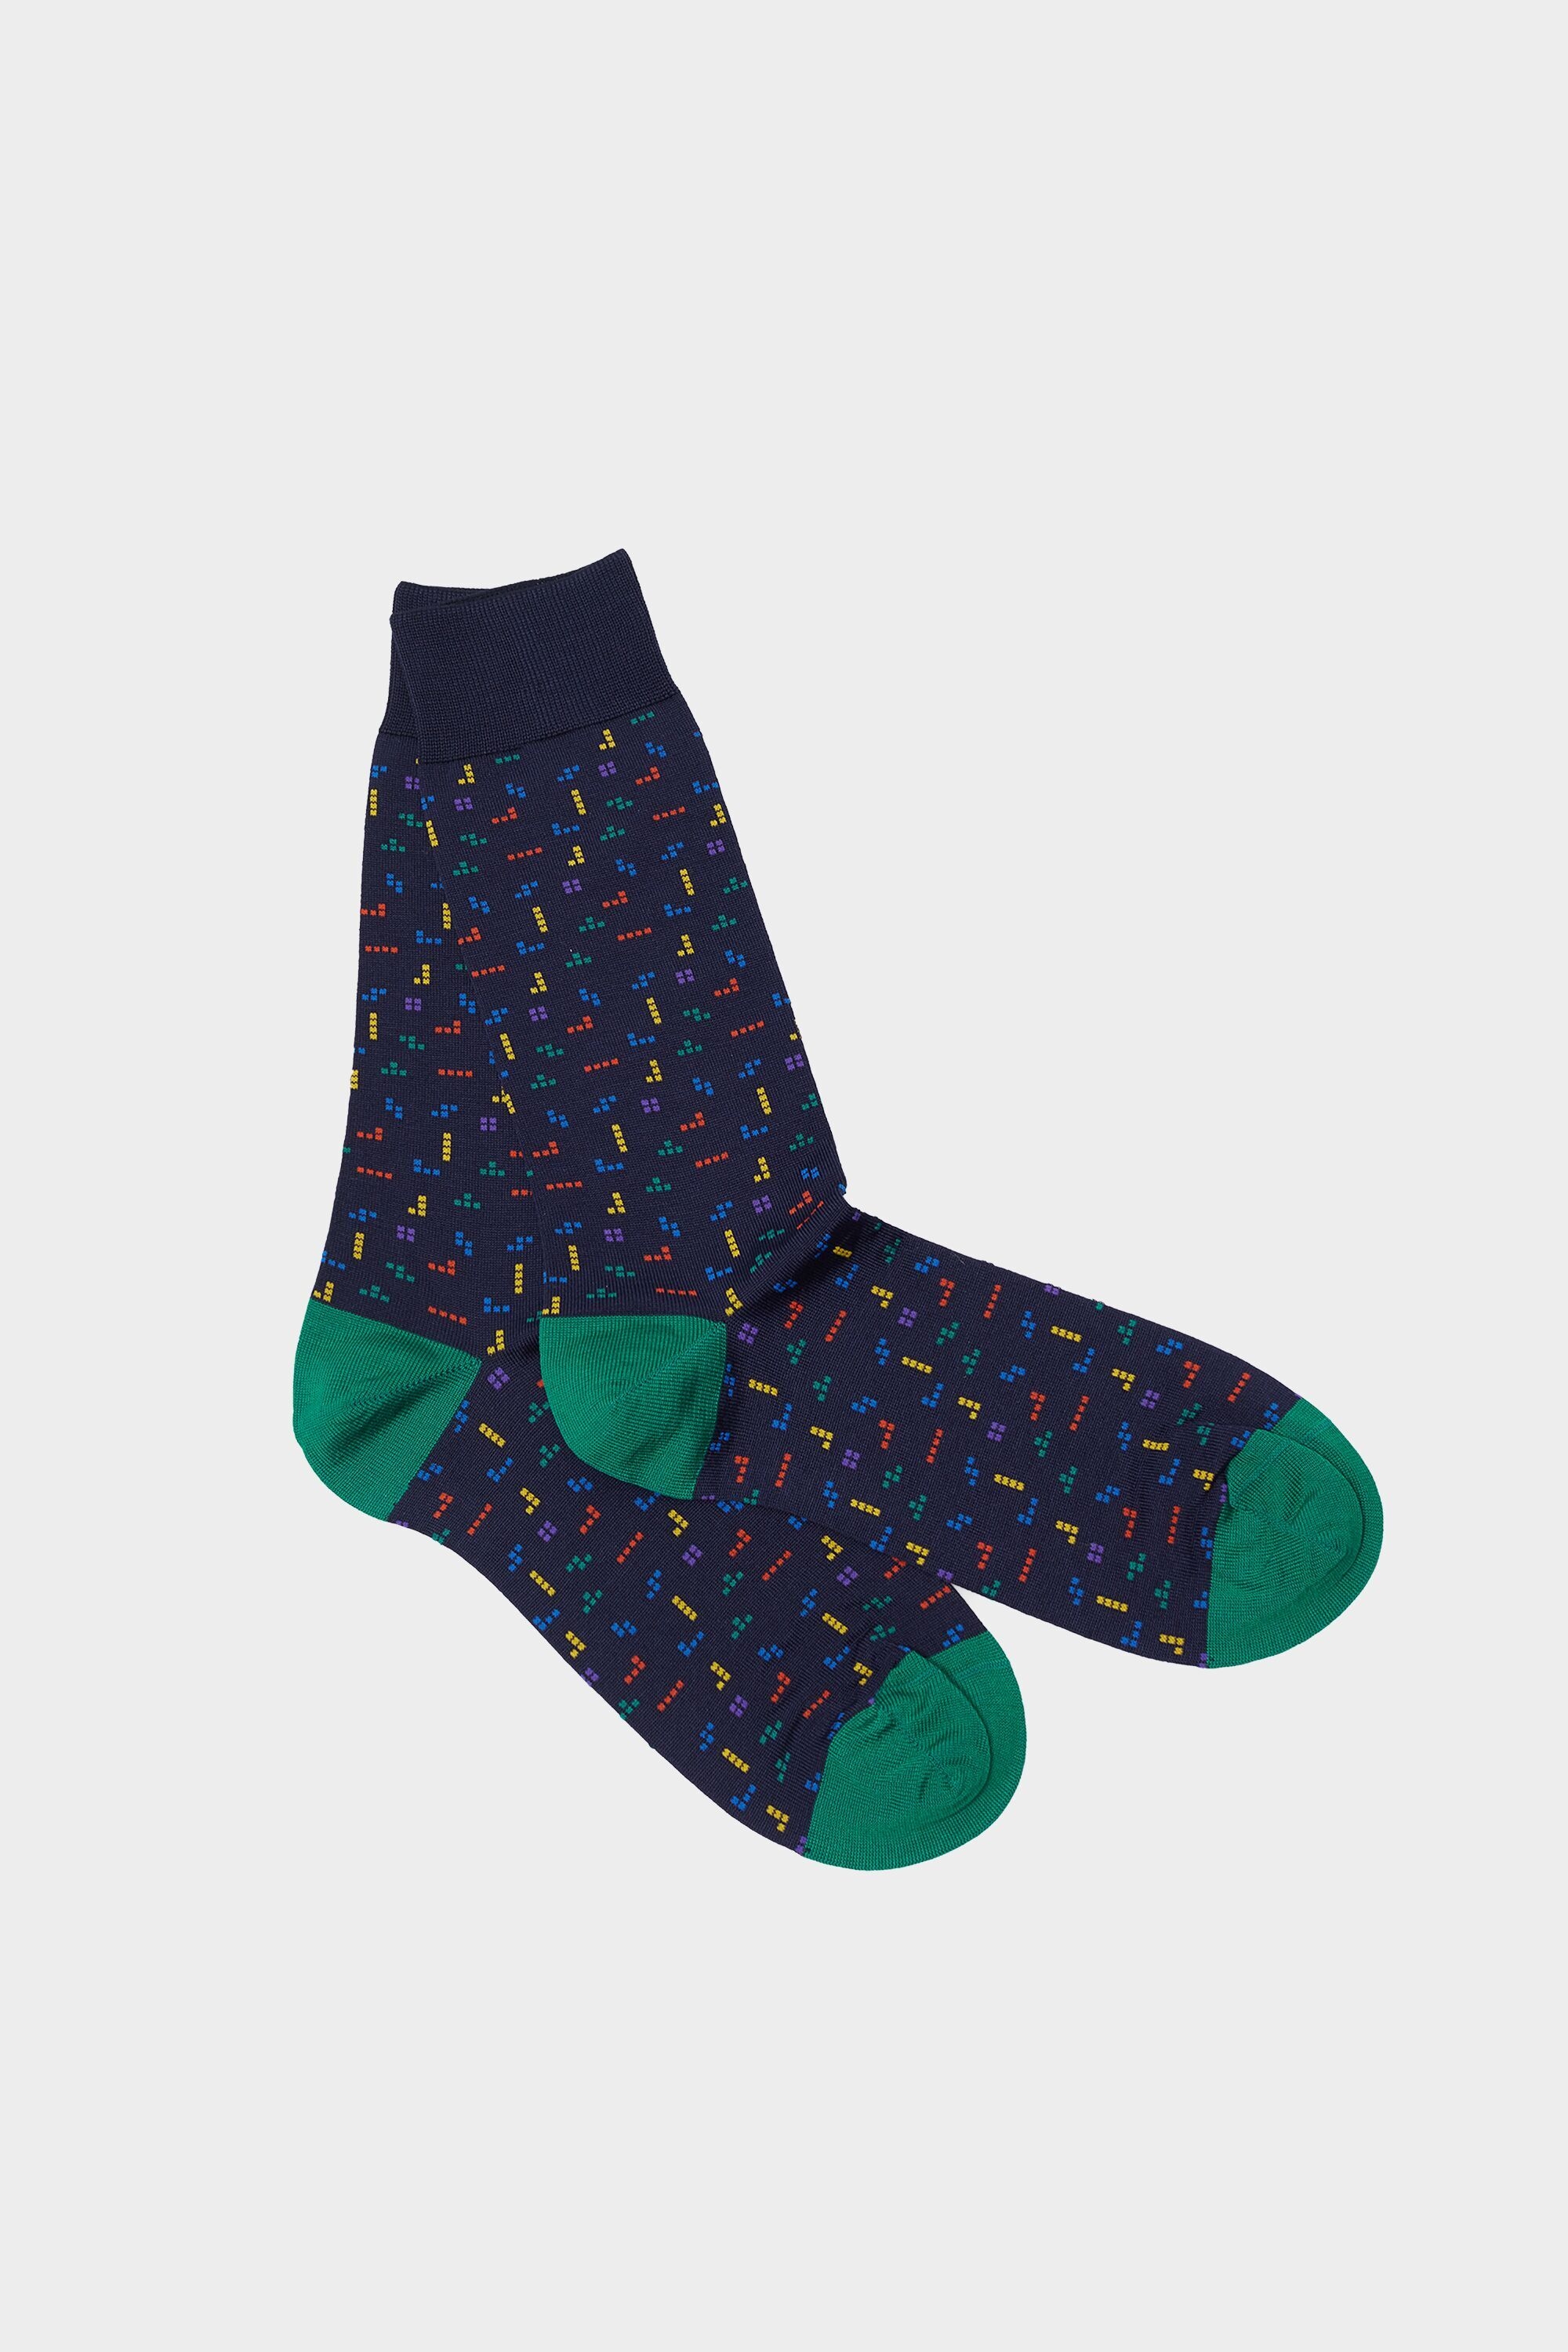 Tetris socks